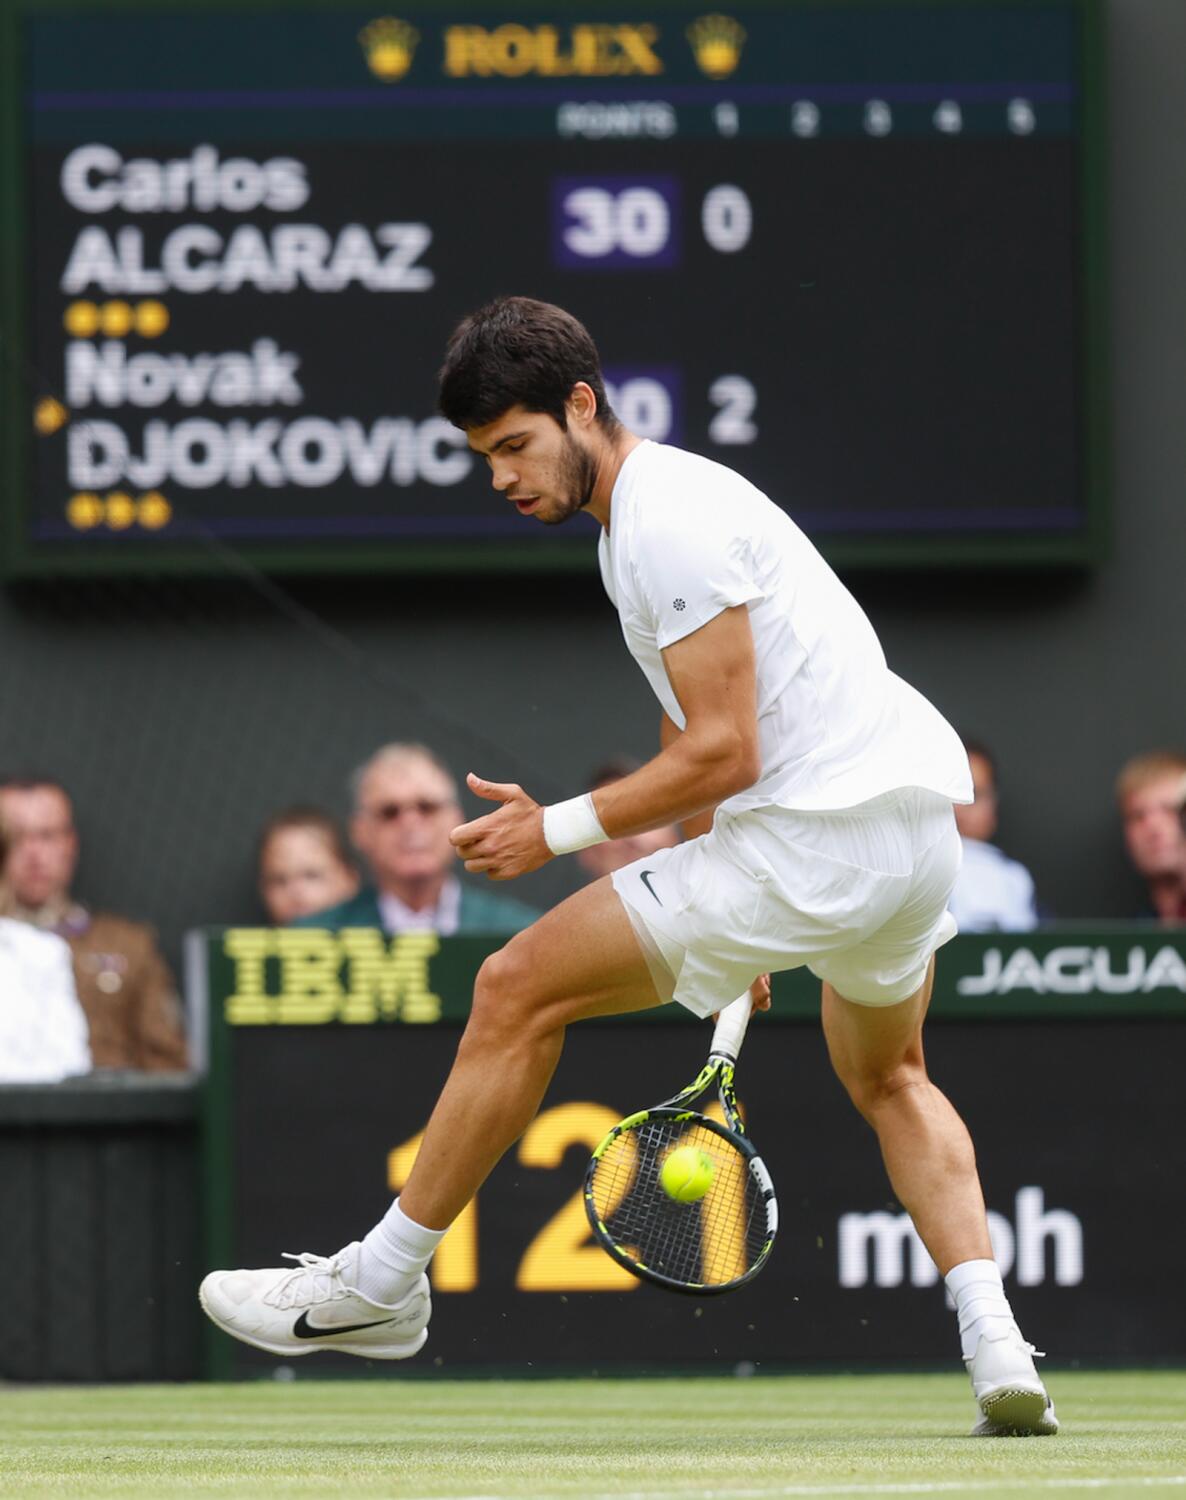 Carlos Alcaraz hits a tweener (between the legs shot with his back facing the net) against Novak Djokovic in the 2023 Wimbledon final. Alcaraz stunned Djokovic in an epic five-setter